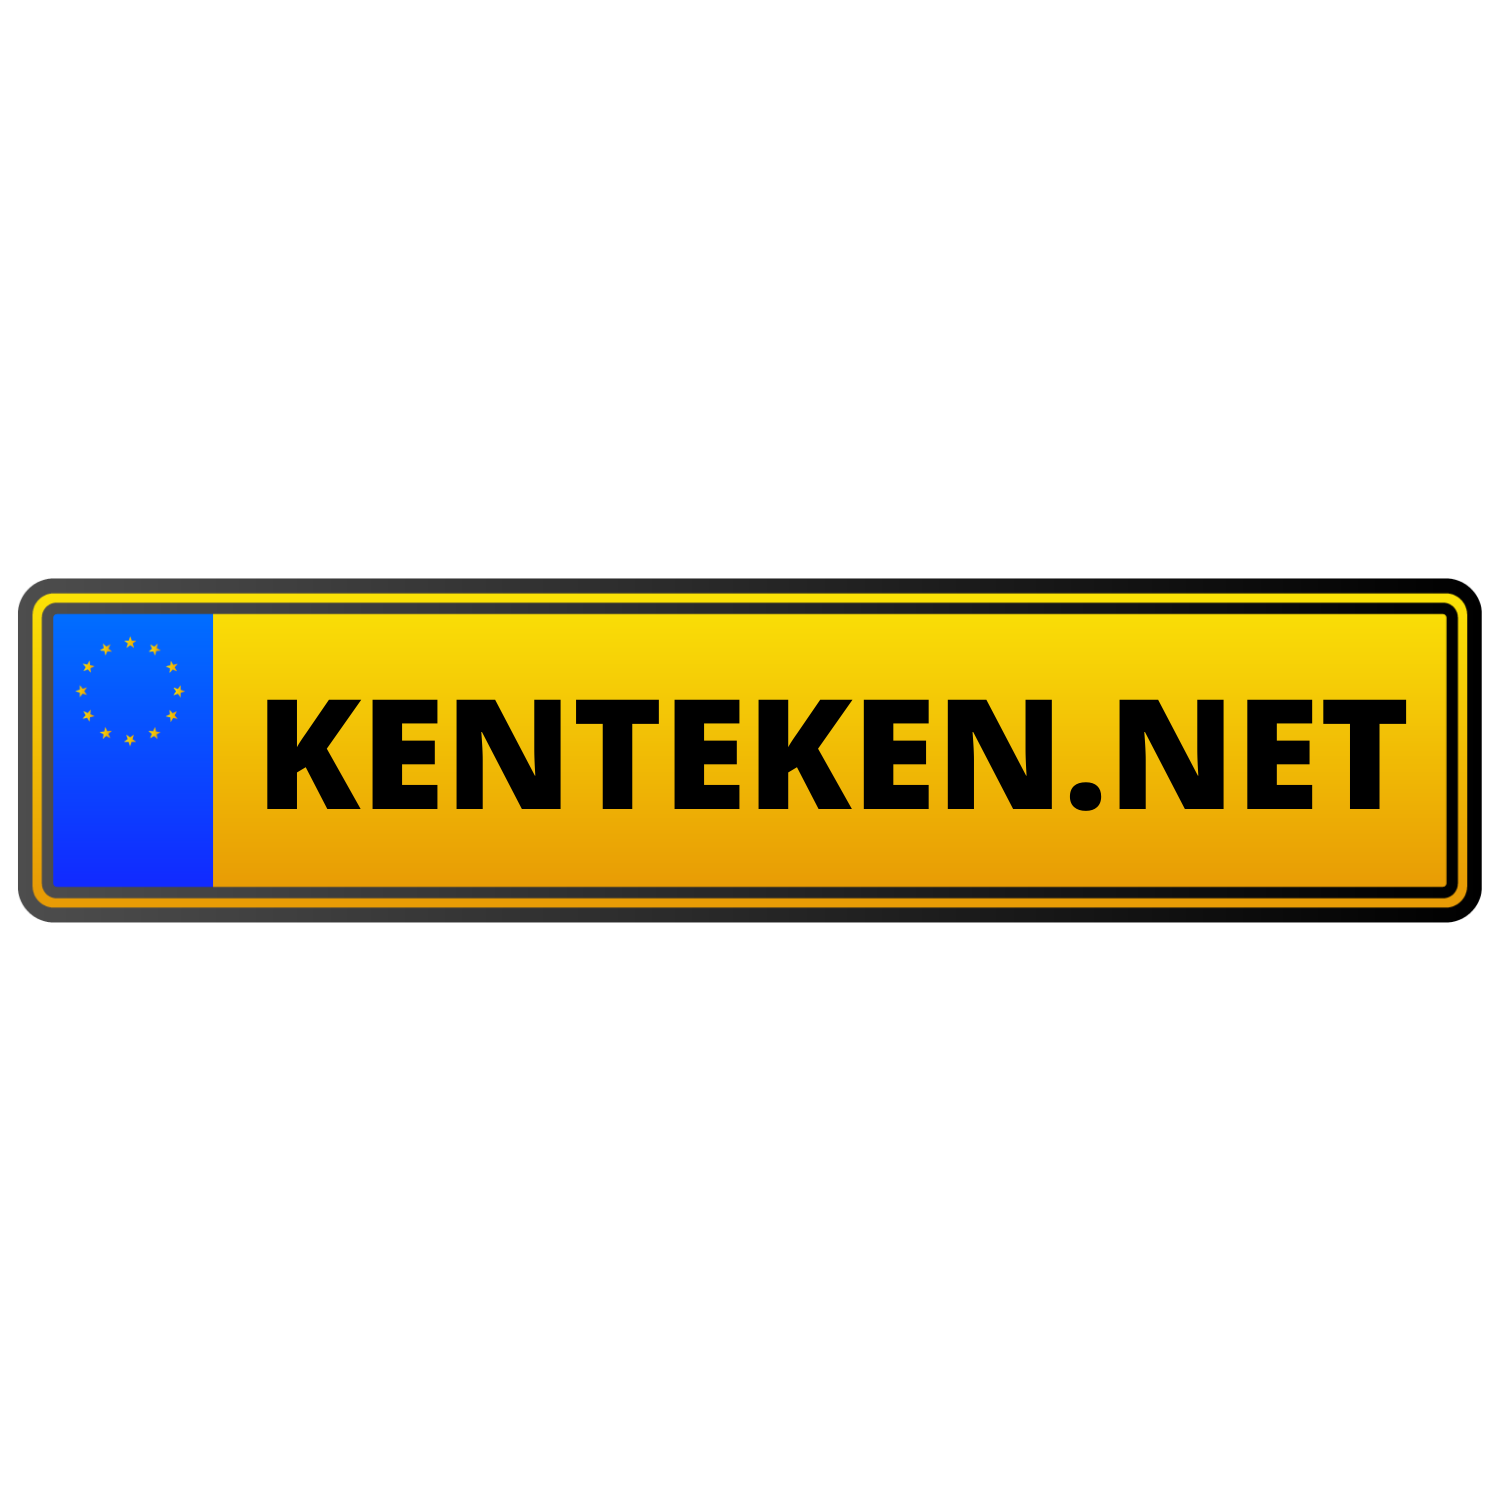 KENTEKEN.net | EMD | 33.100 EXACT!-kenteken-net-png